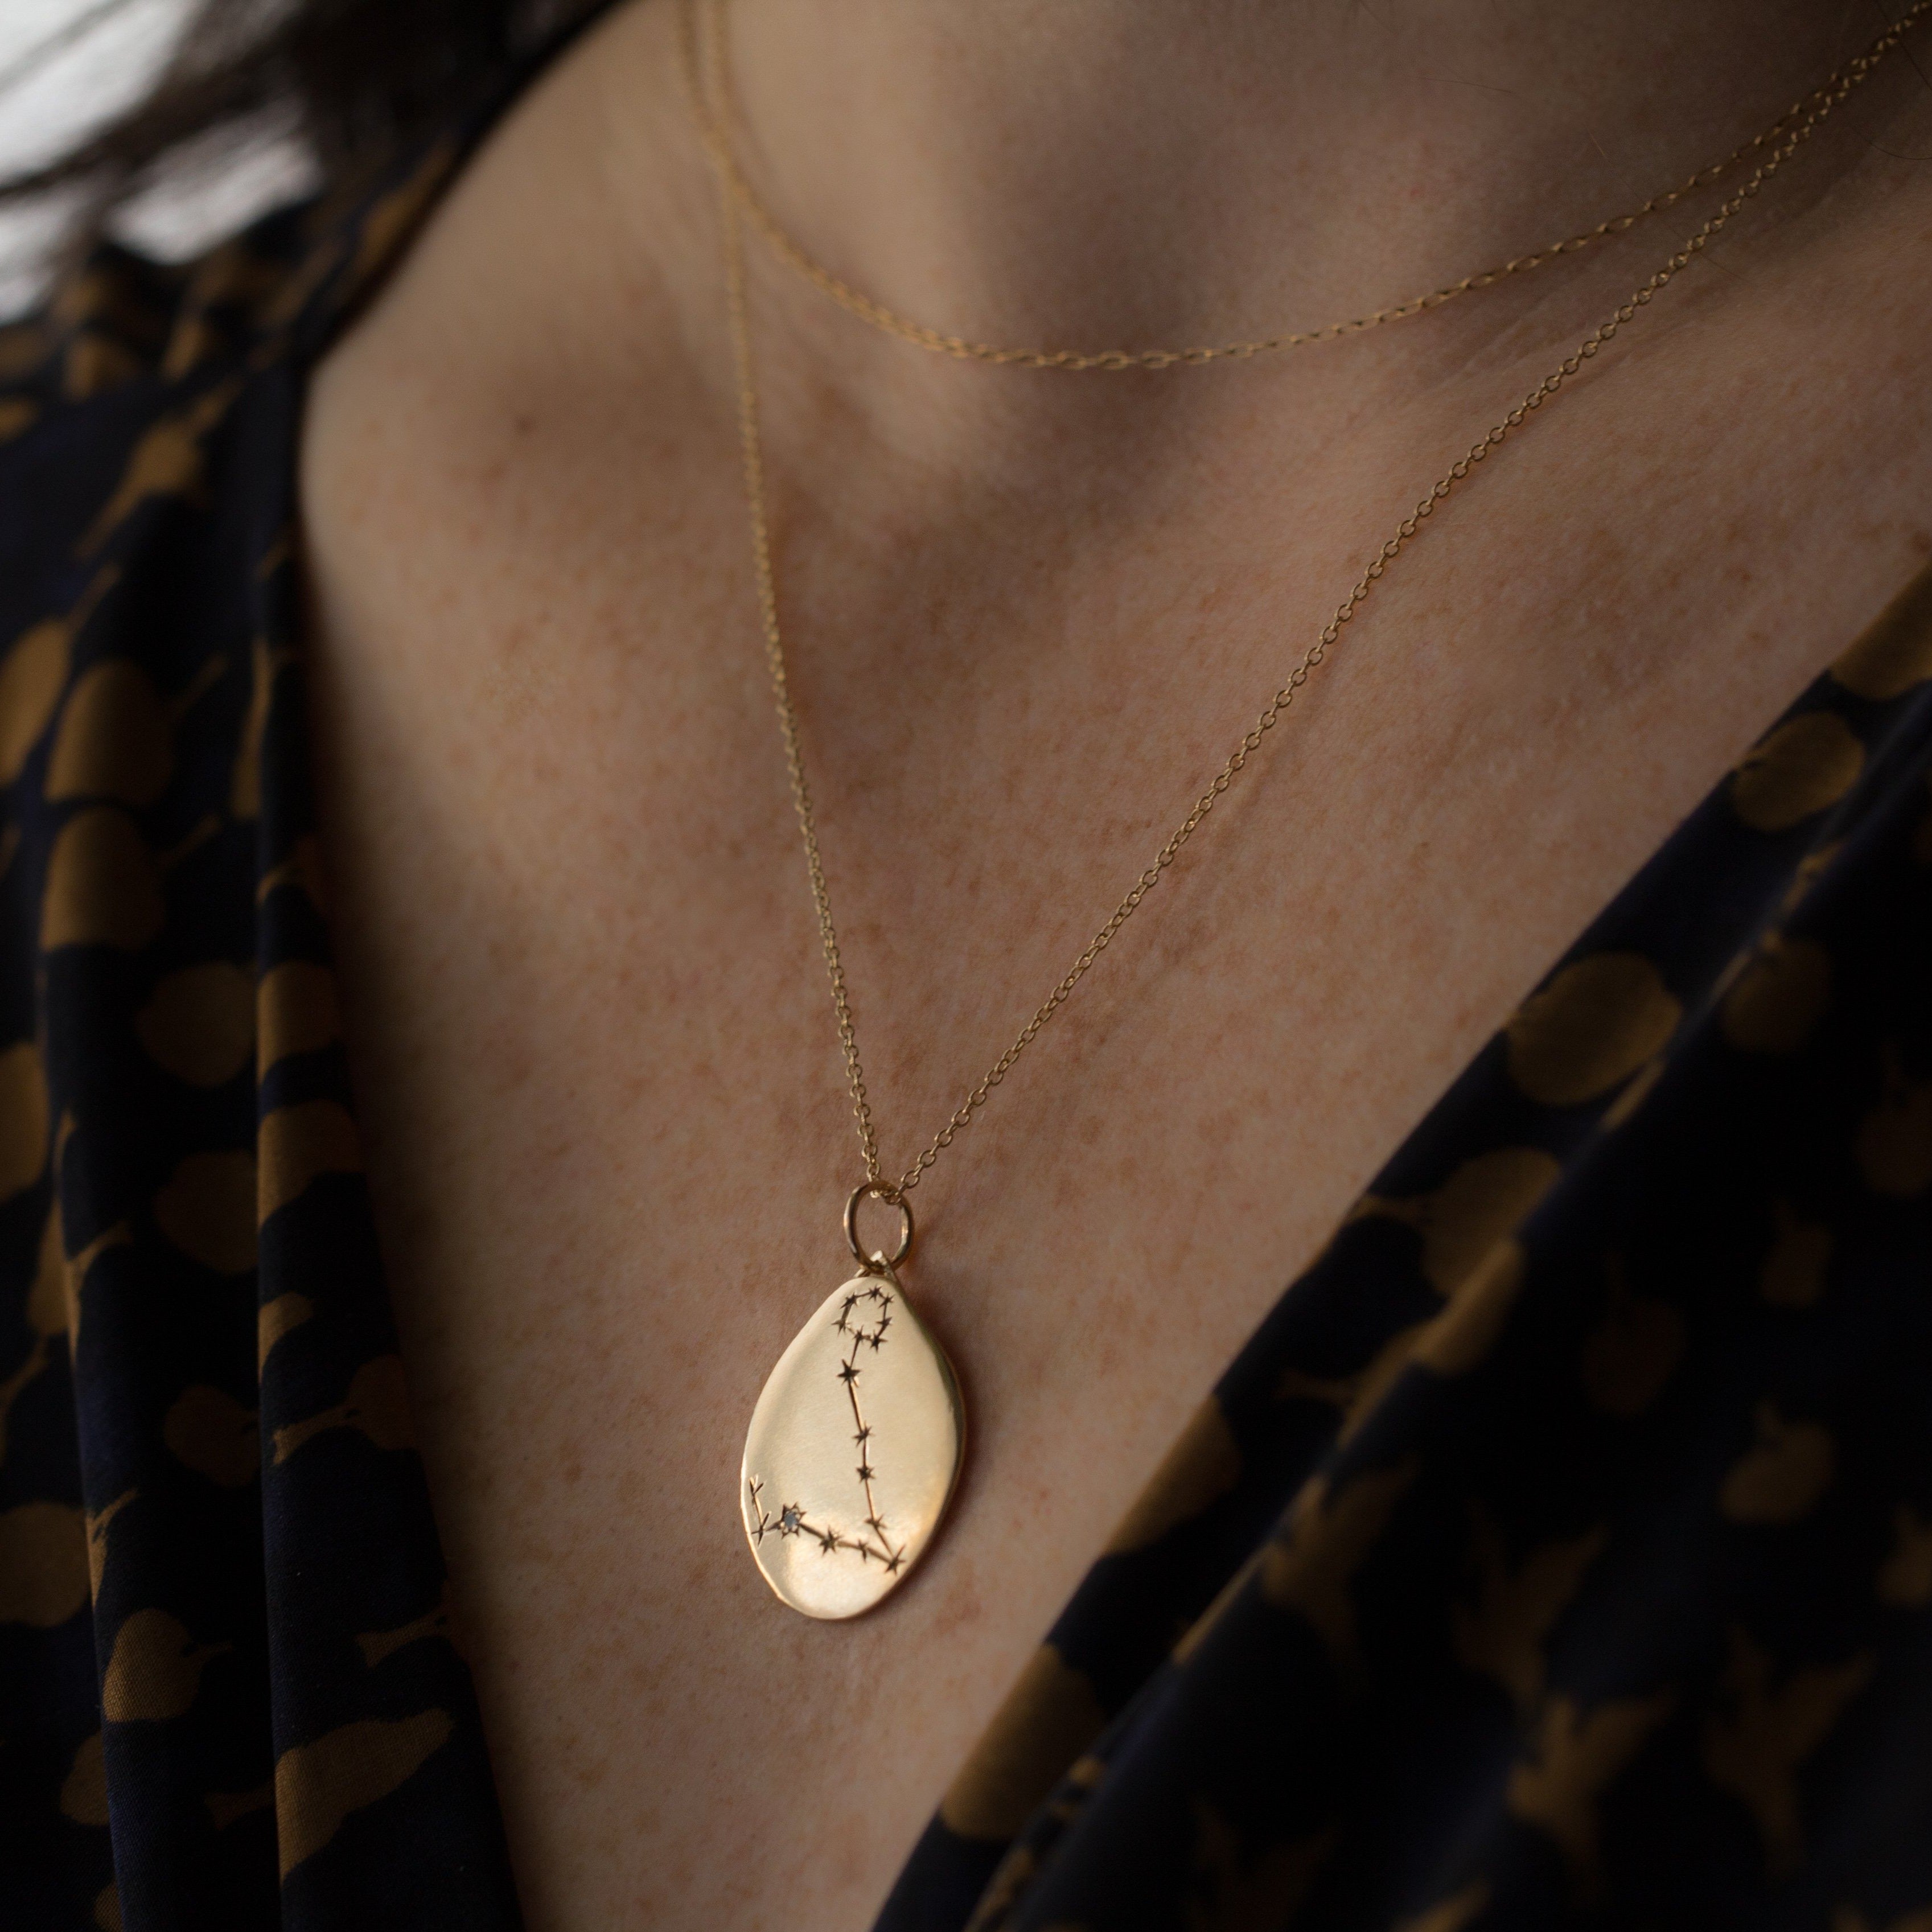 Zodiac sign necklace | Natalie Barat Design